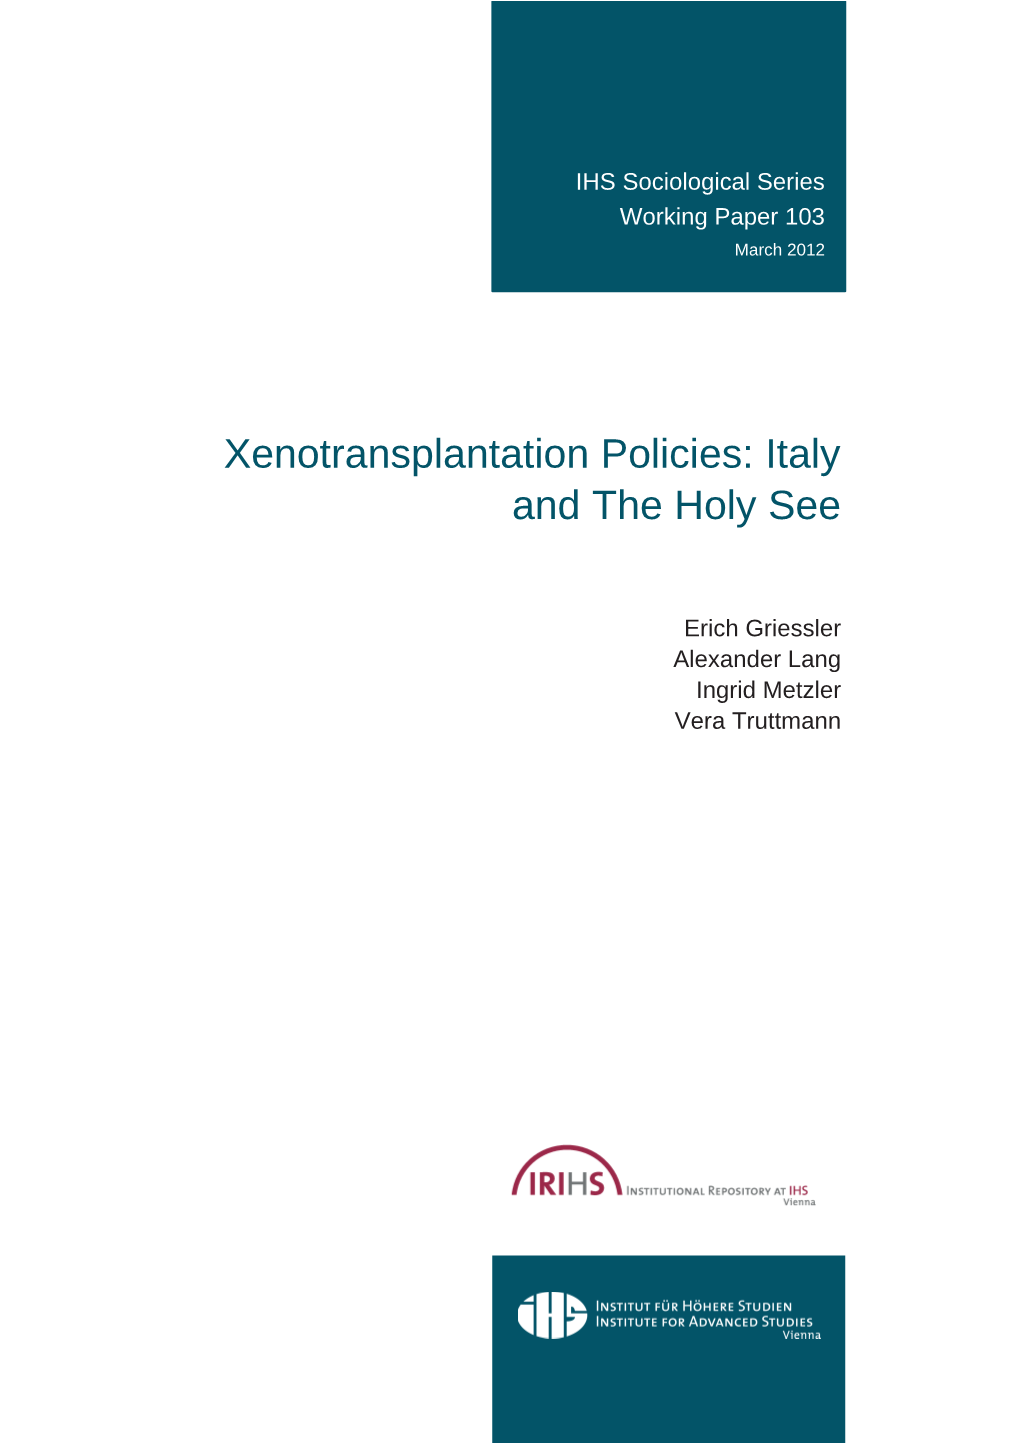 Xenotransplantation Policies: Italy and the Holy See